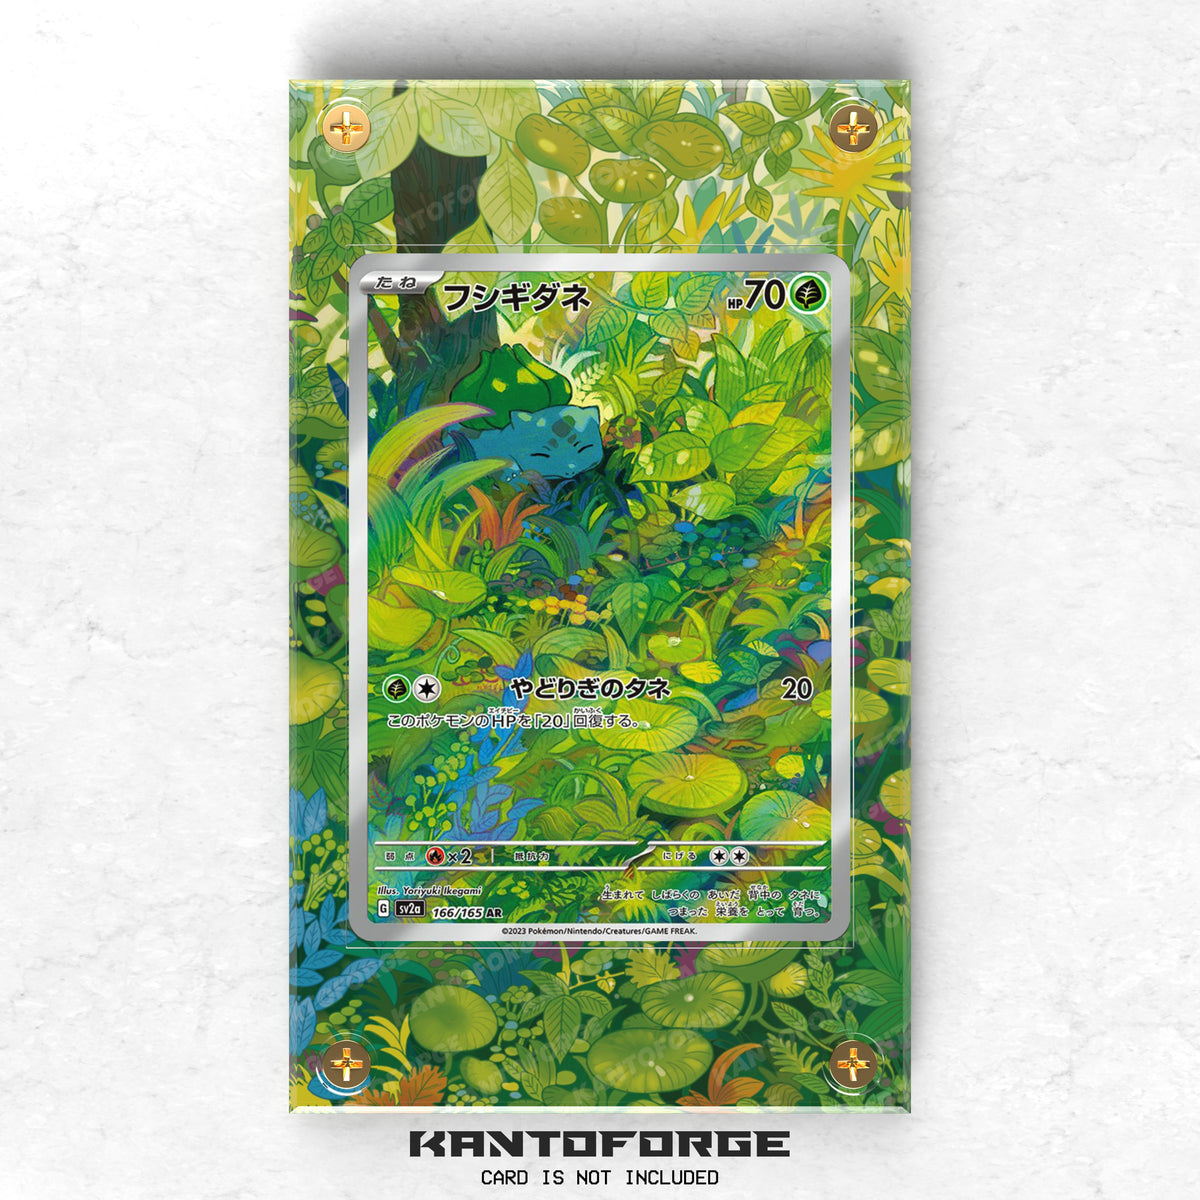 Bulbasaur (フシギダネ) 166/165 - Pokémon Extended Artwork Protective Card Display Case